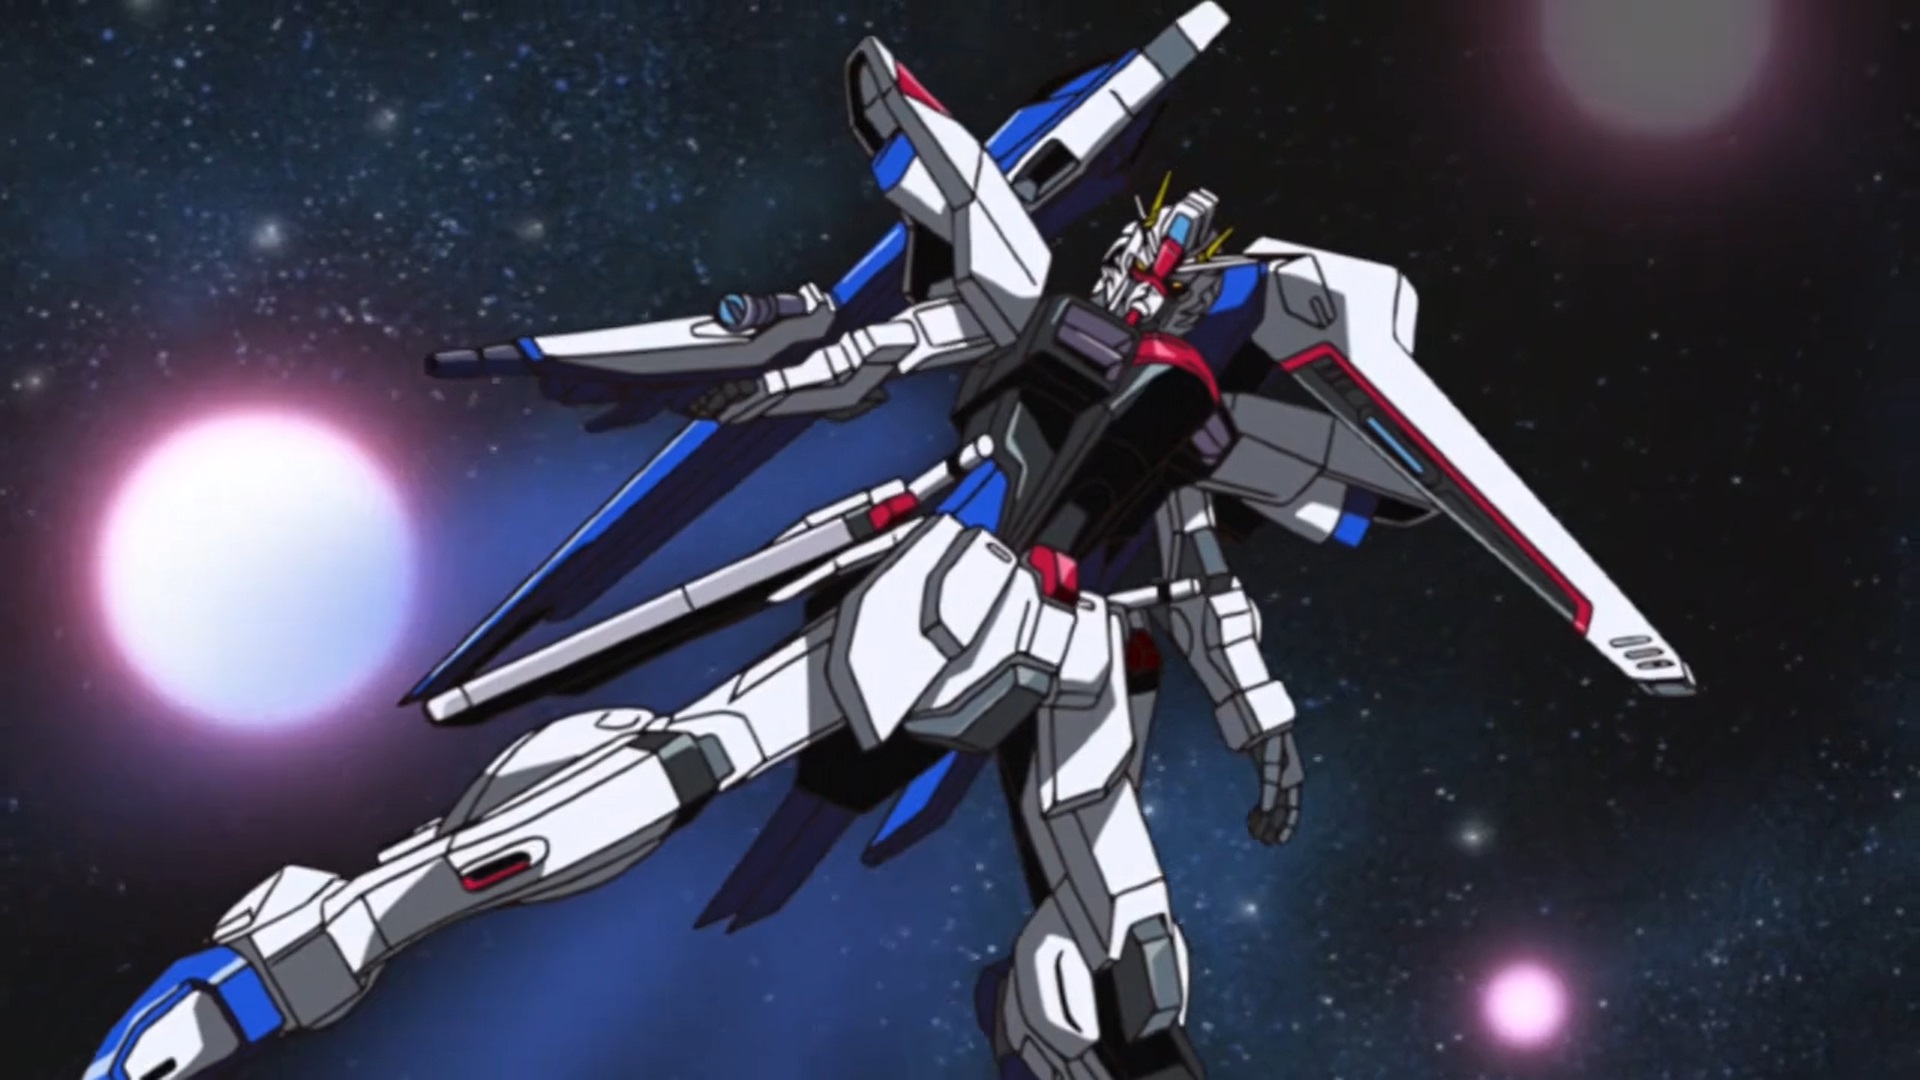 Anime 1920x1080 anime mechs Mobile Suit Gundam SEED Anime screenshot Super Robot Taisen Gundam artwork digital art Freedom Gundam